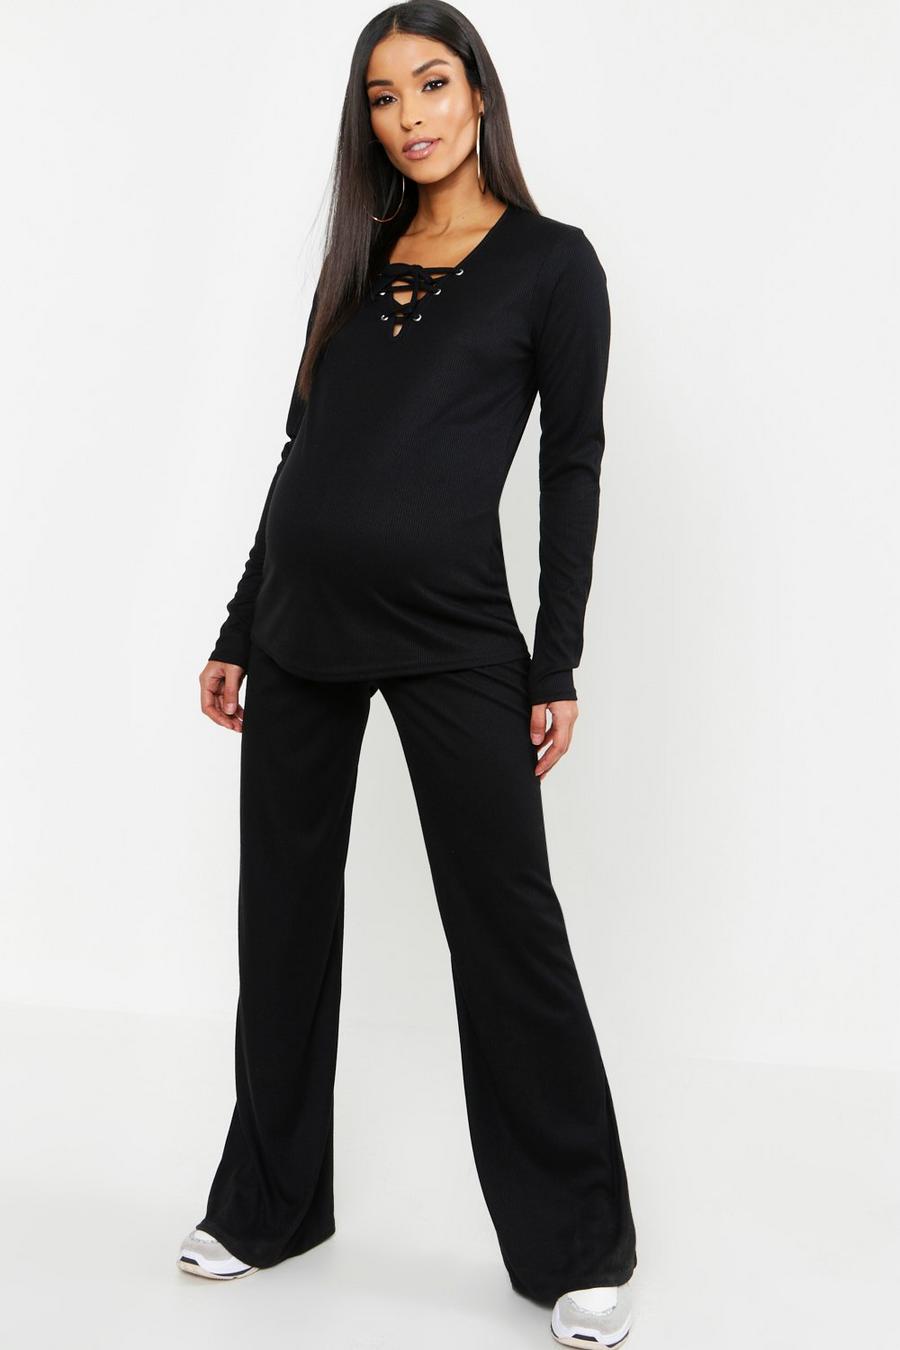 Black Maternity Lace Up Front Loungewear Set